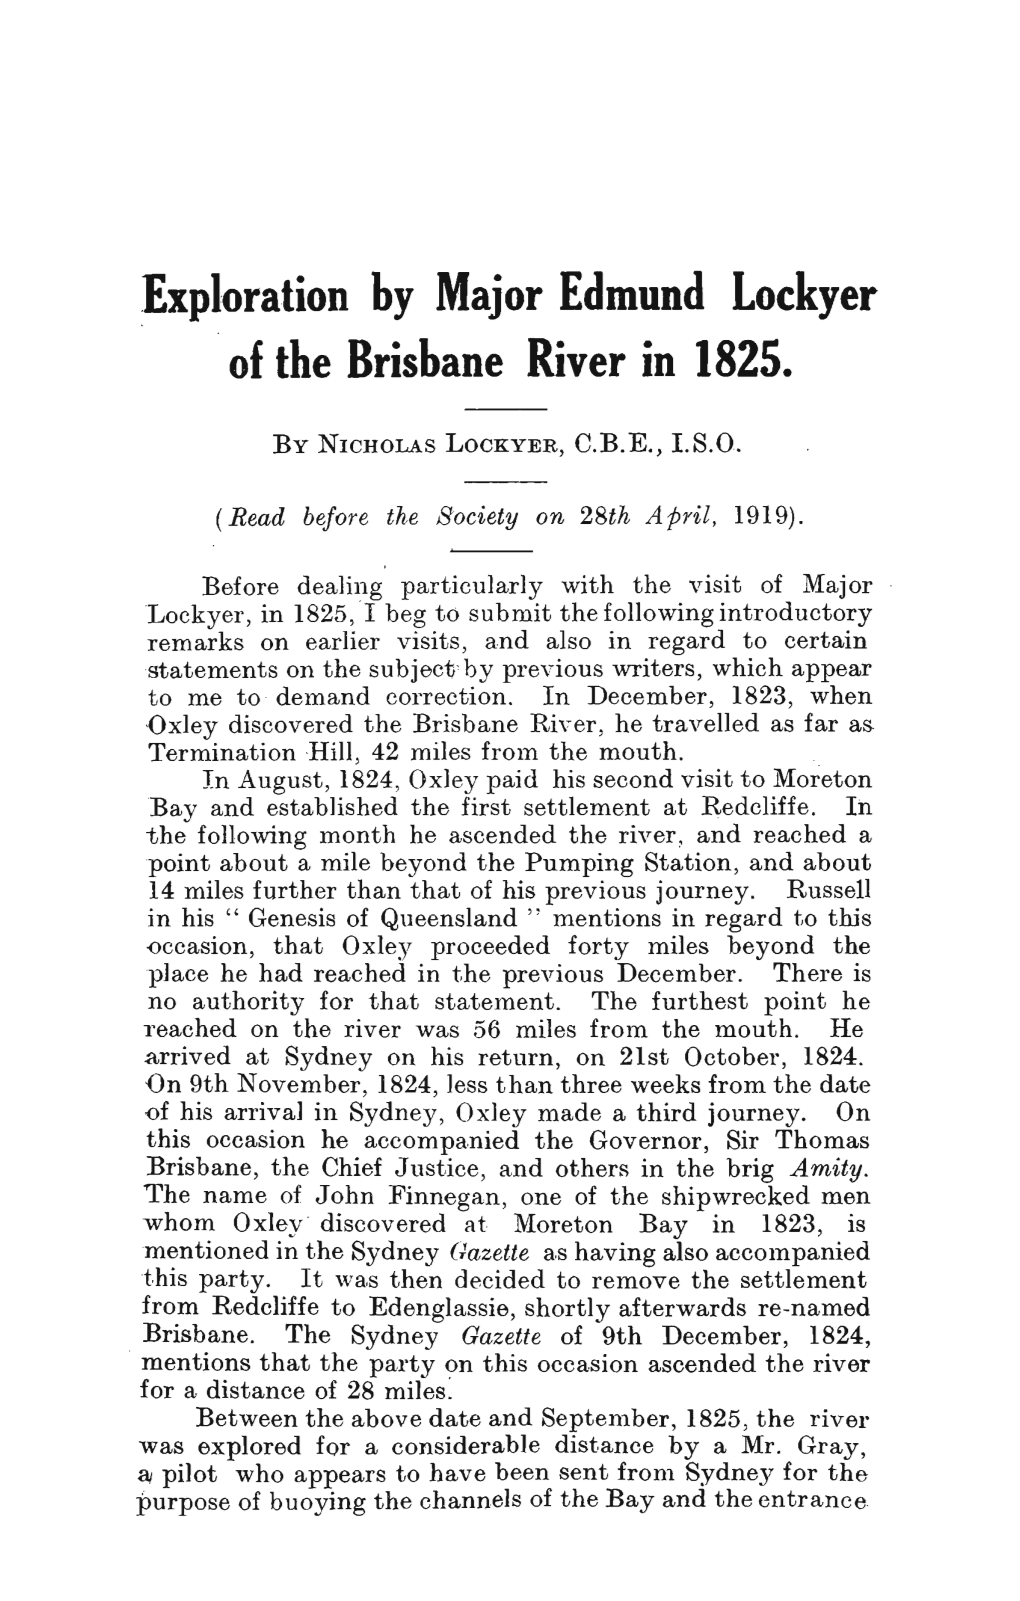 Exploration by Major Edmund Lockyer of the Brisbane River in 1825